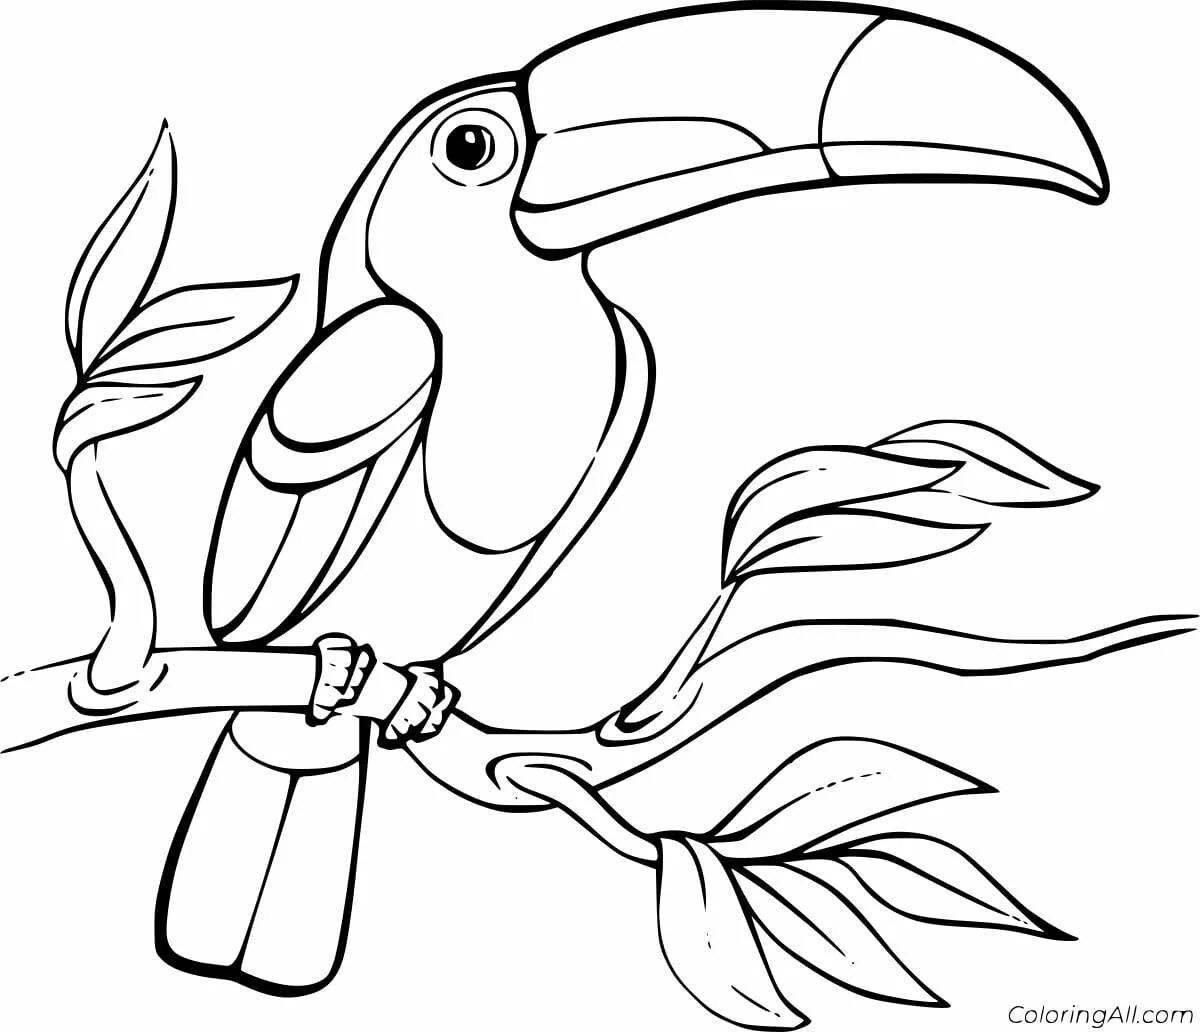 A fun toucan coloring book for kids